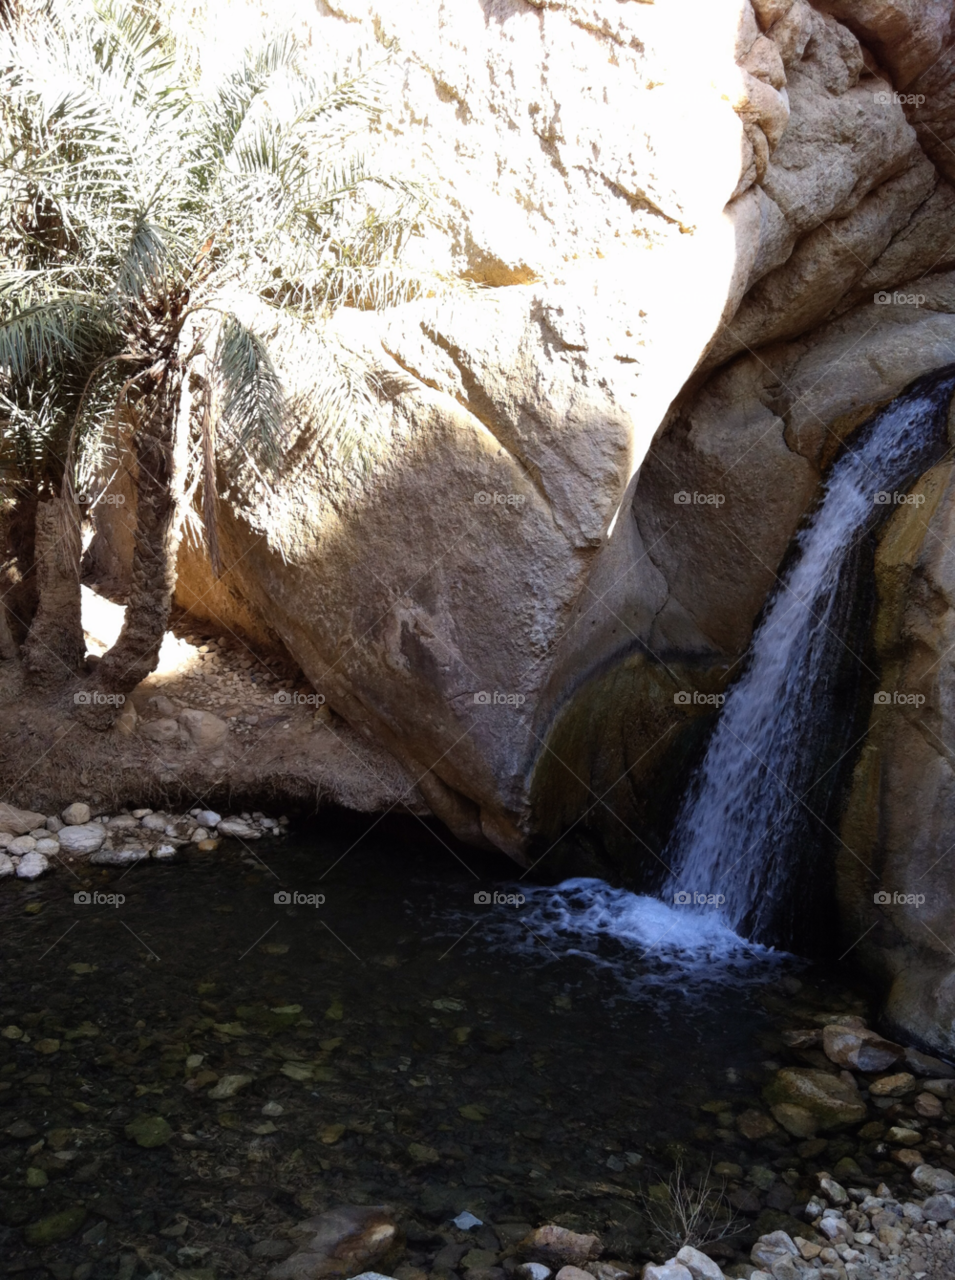 waterfall valley 2 tunisia by tazshah